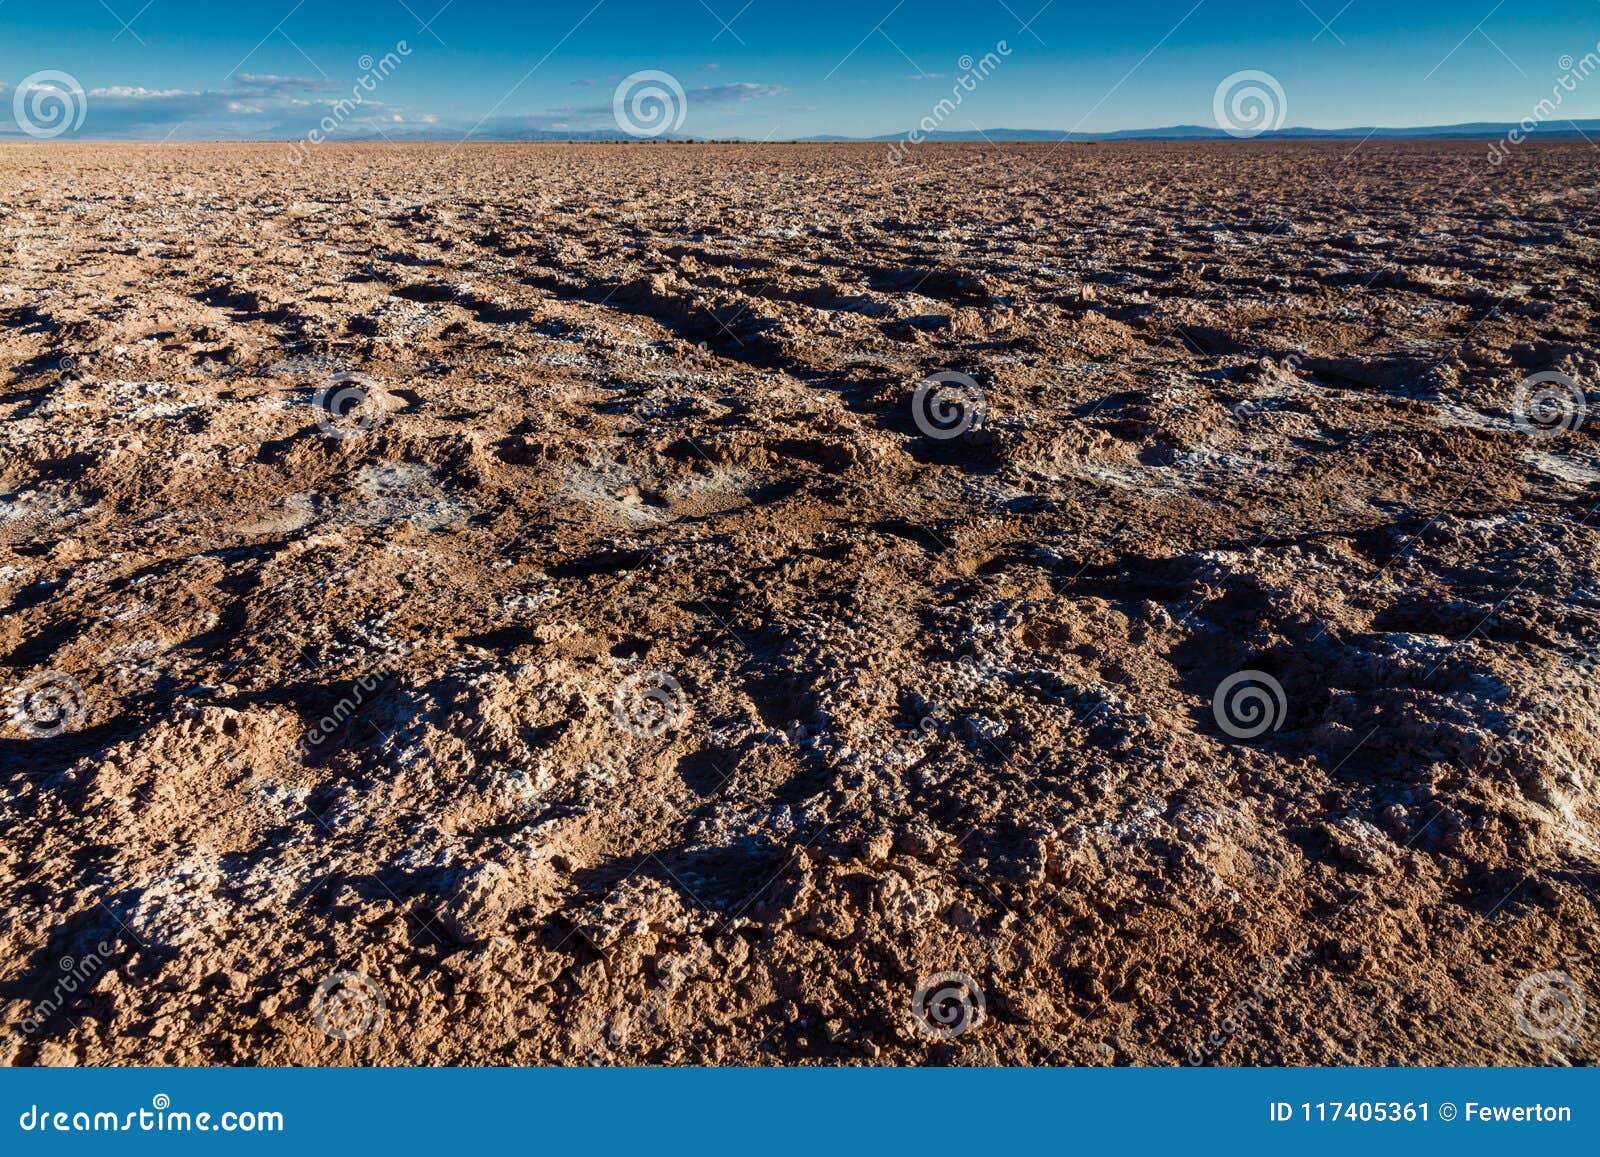 panoramic landscape near Ã¢â¬Åojos del salarÃ¢â¬Â in the atacama desert, chile, depicting the wilderness immense dimensions of desert